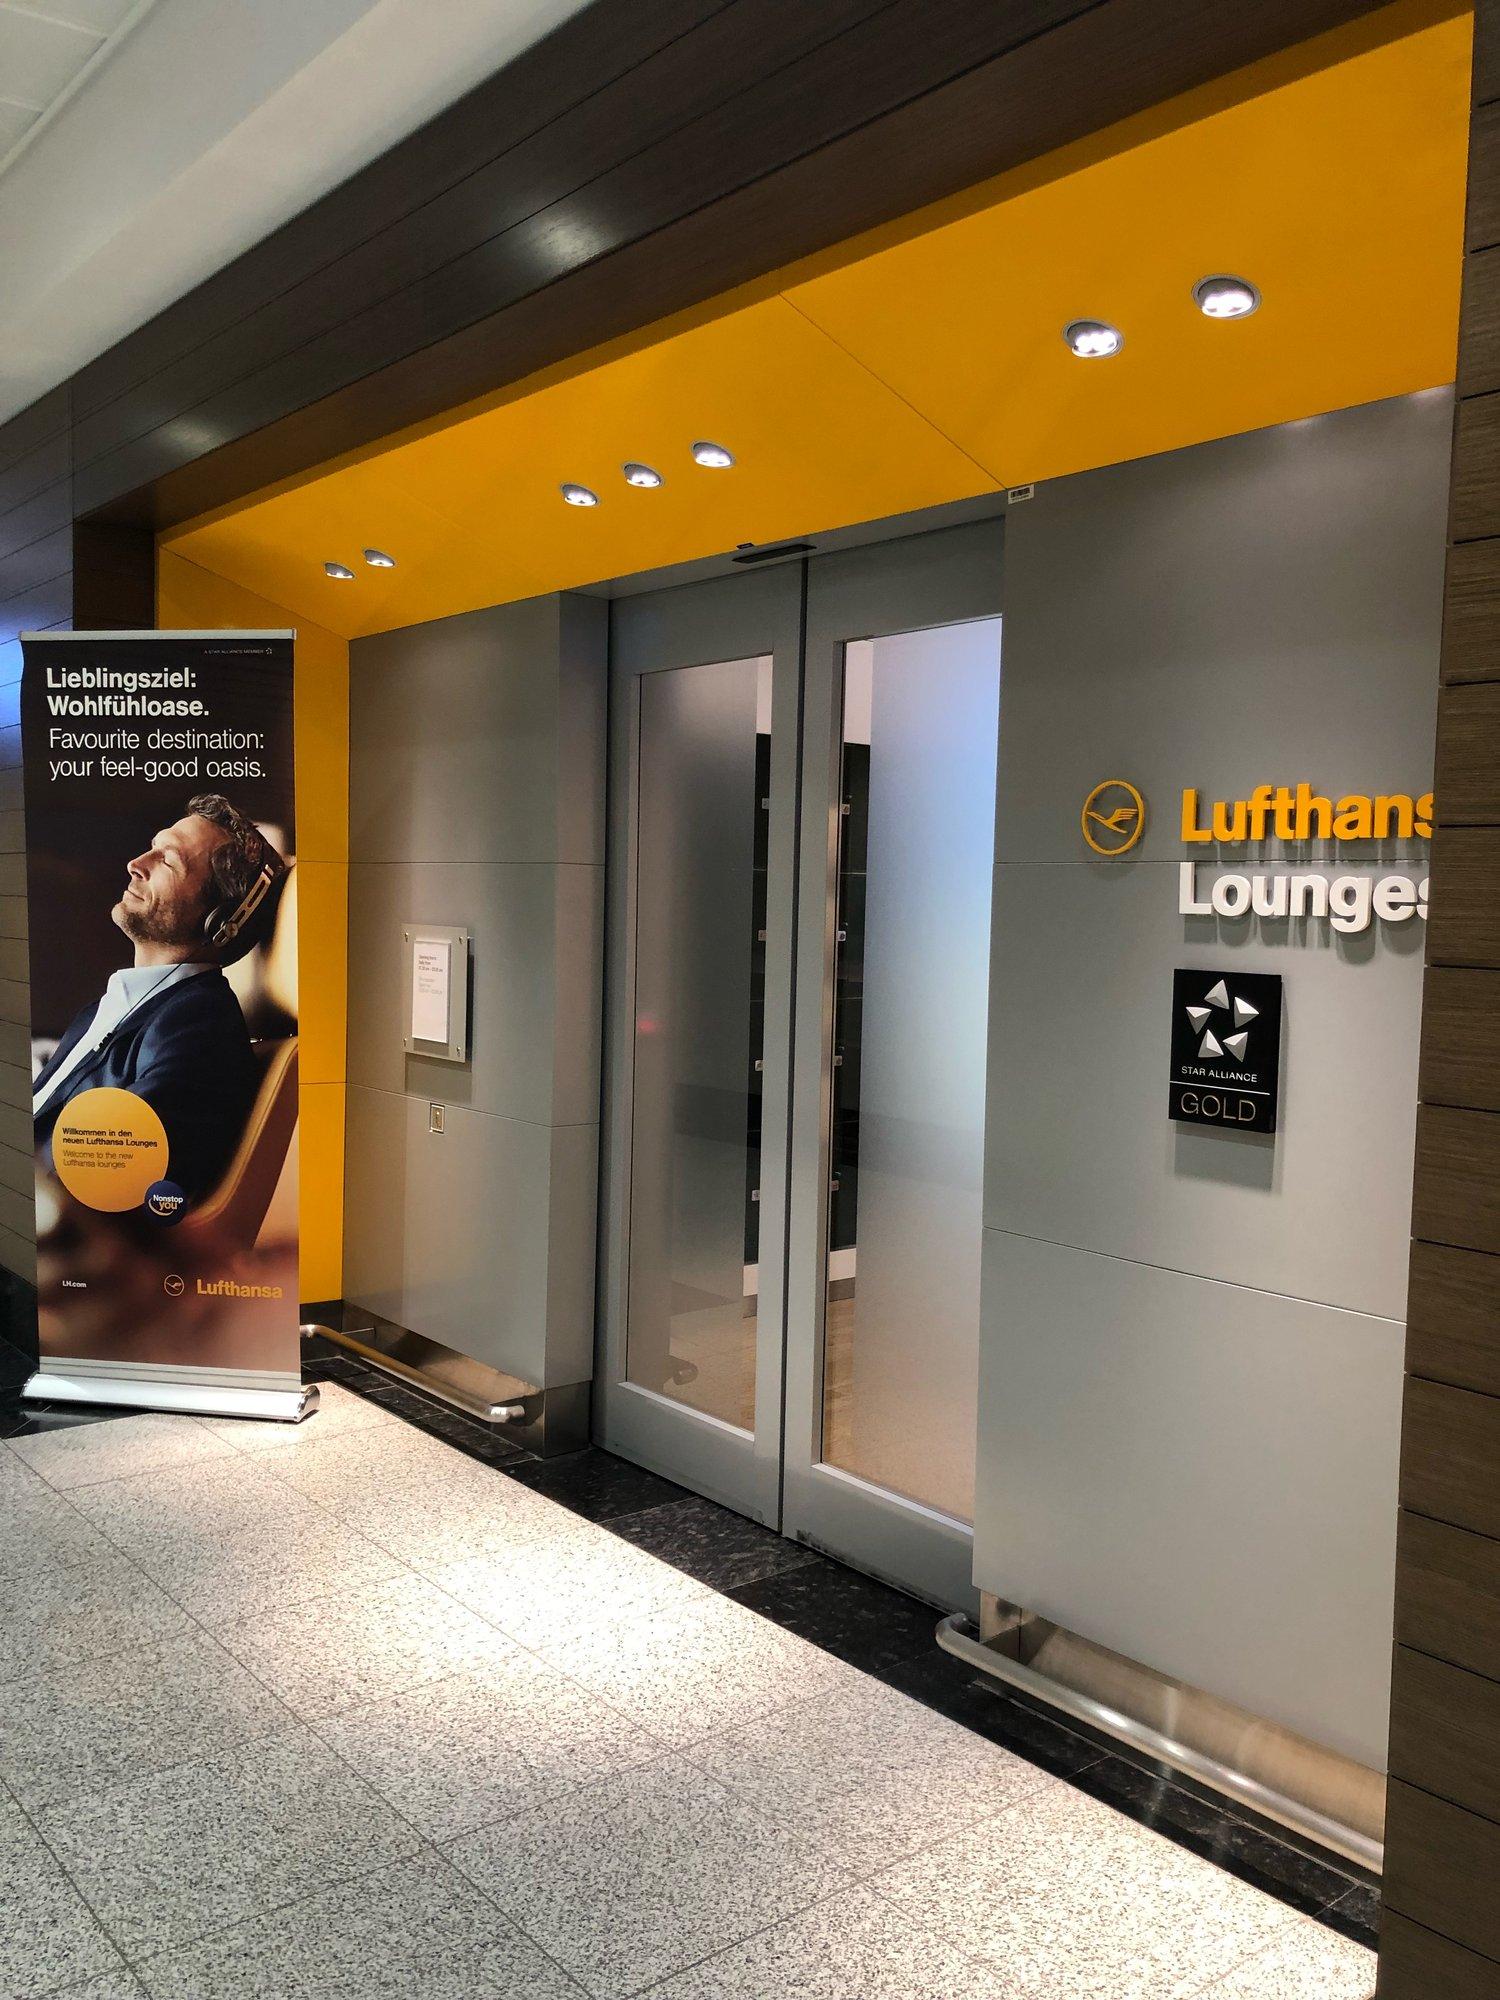 Lufthansa Business Lounge image 6 of 6